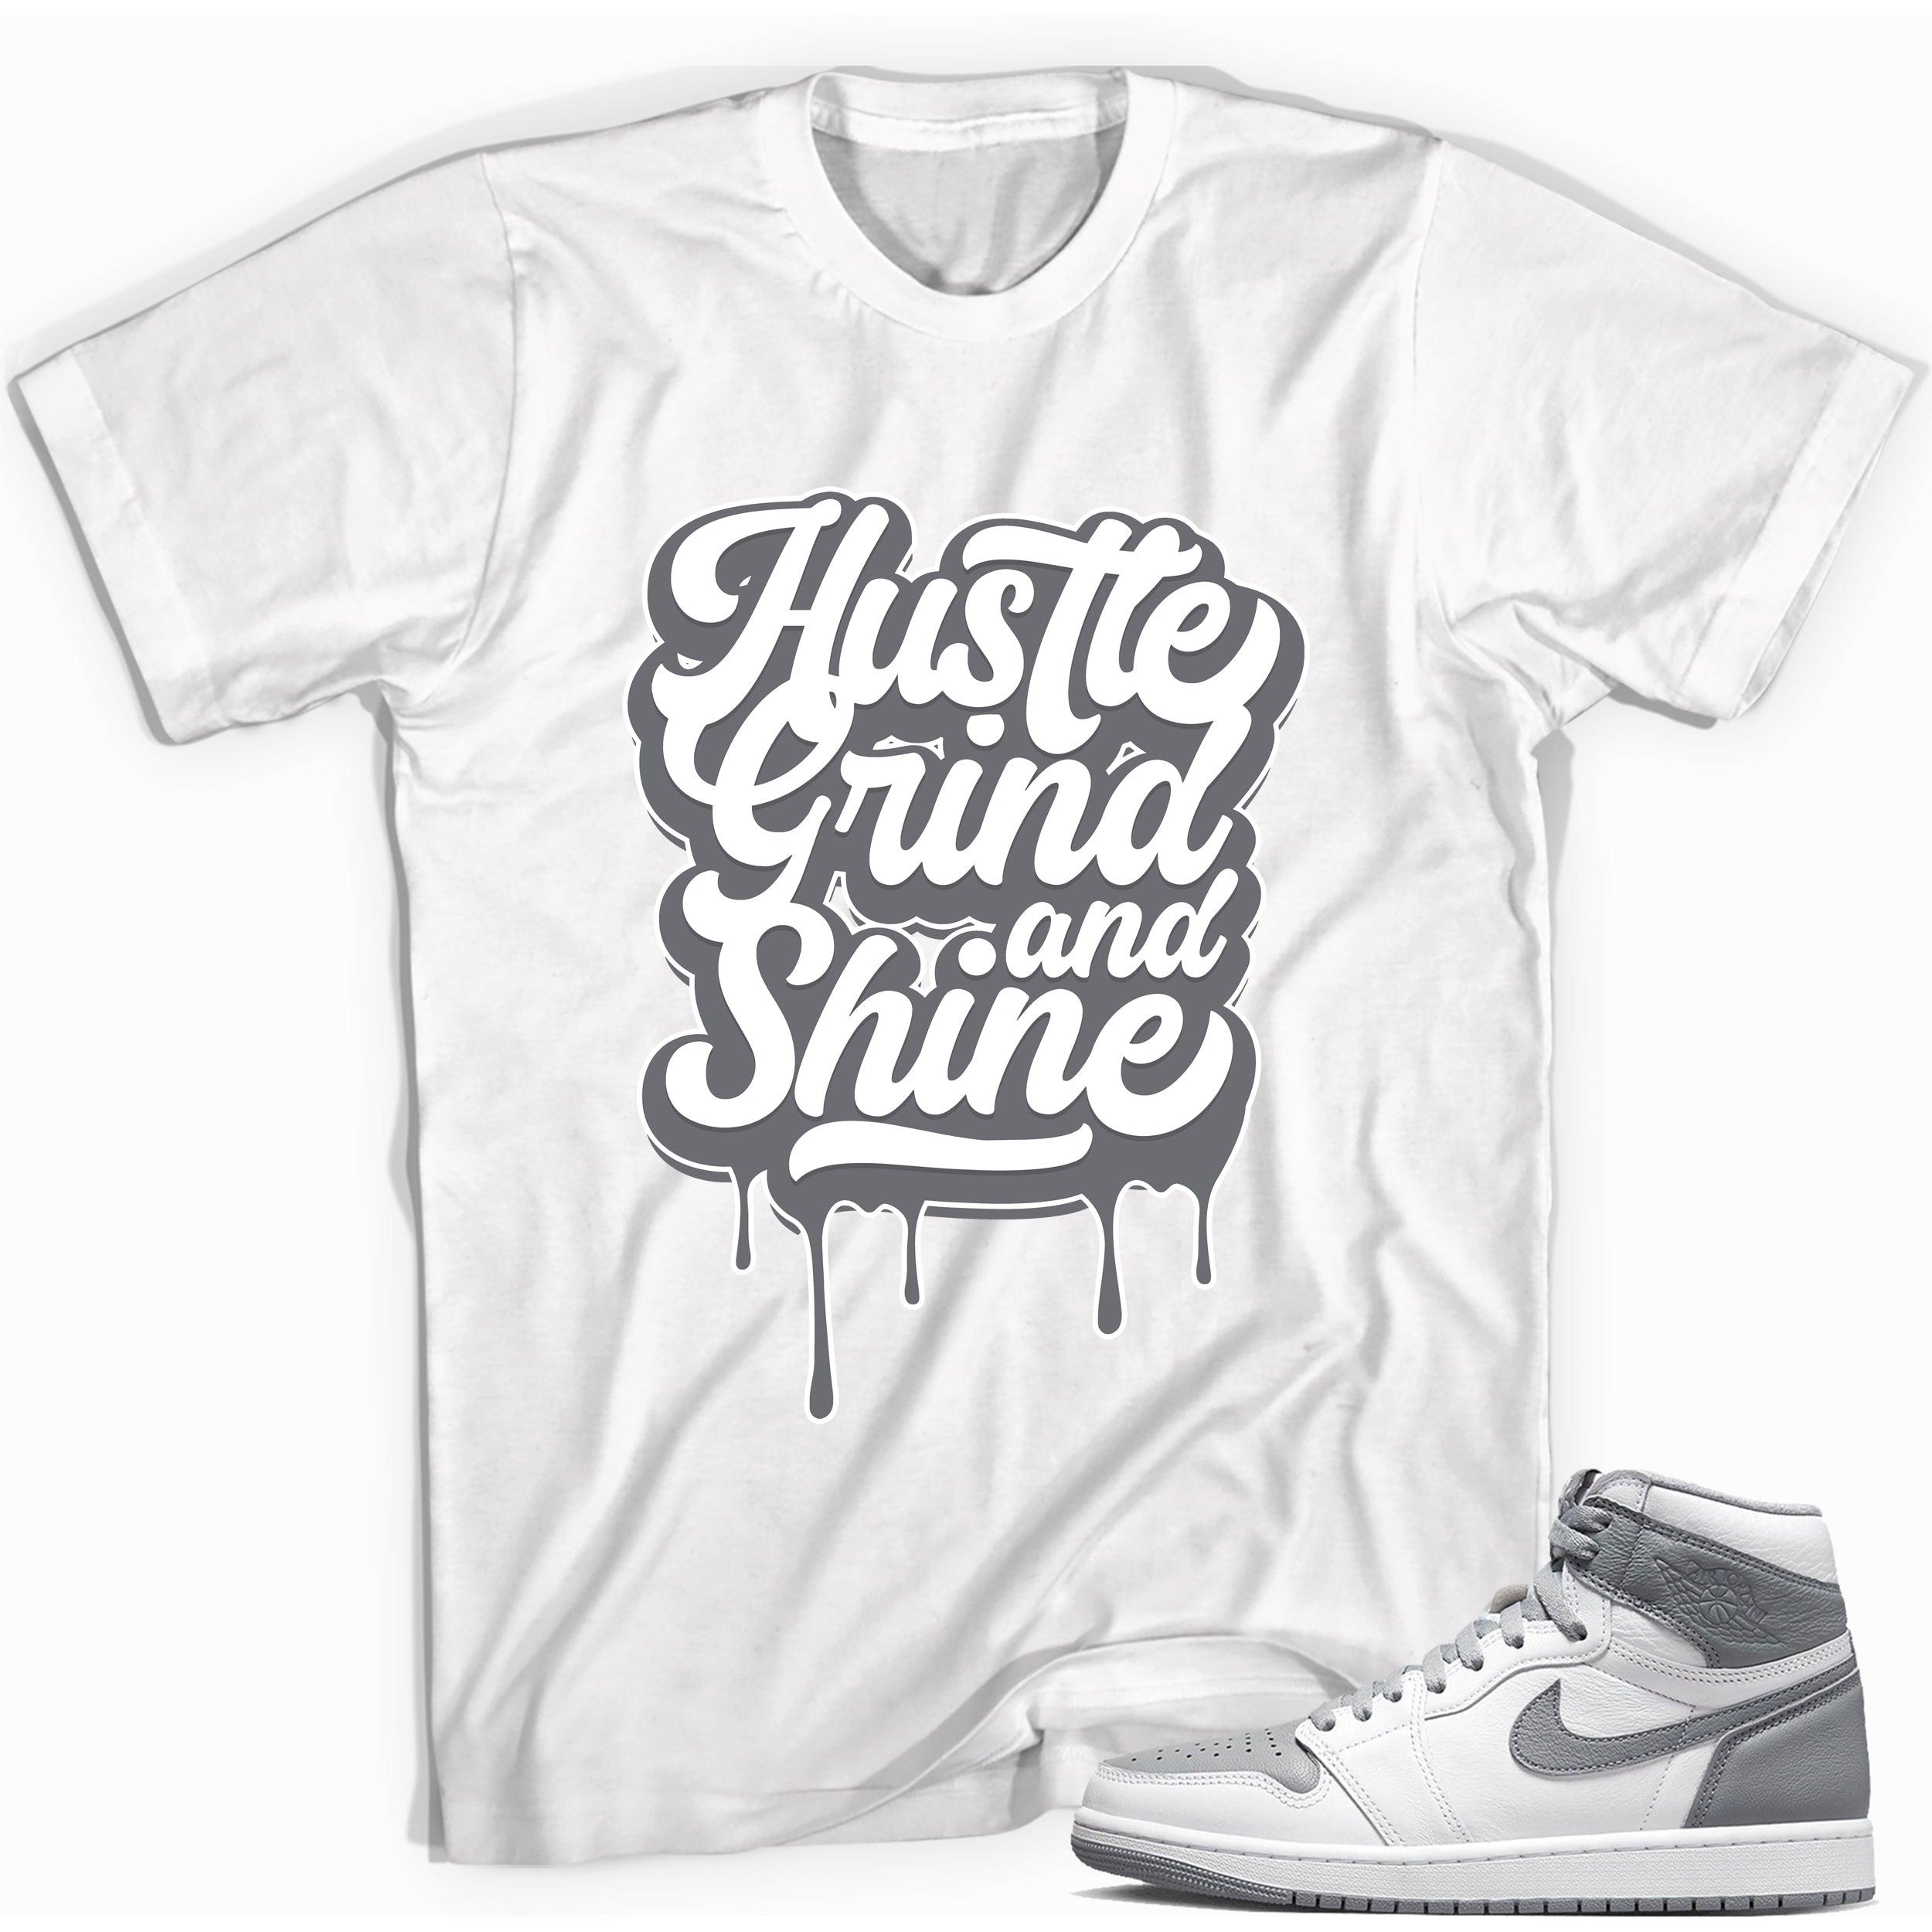 Hustle Grind and Shine Shirt for Jordan 1s Photo